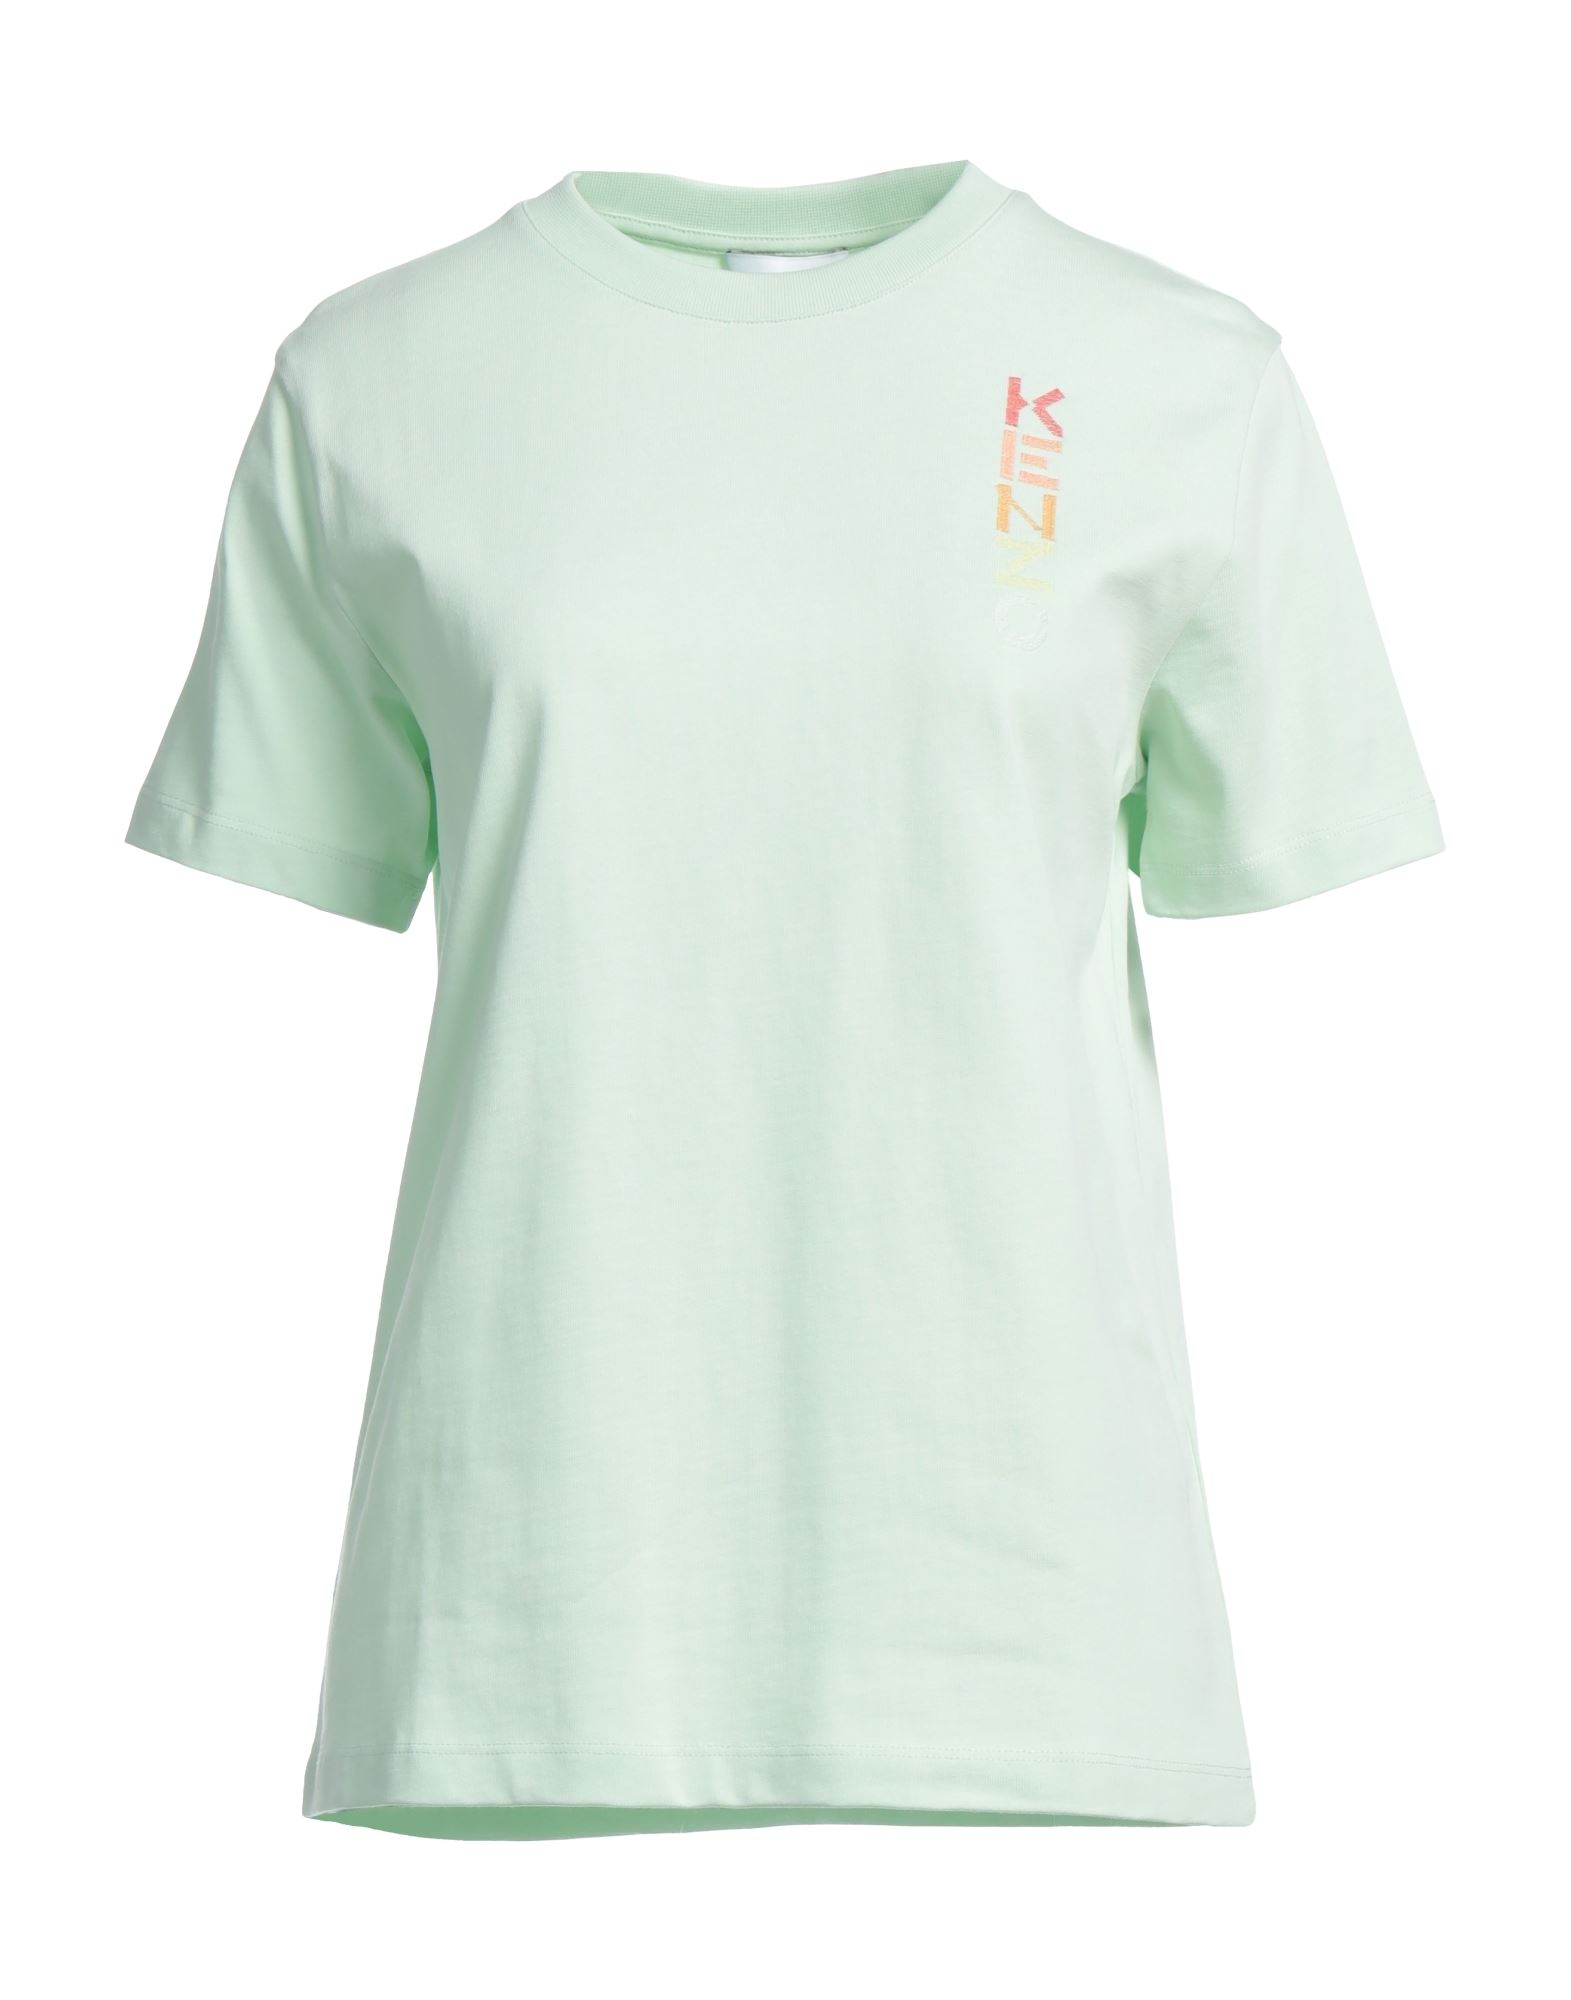 Kenzo T-shirts In Light Green